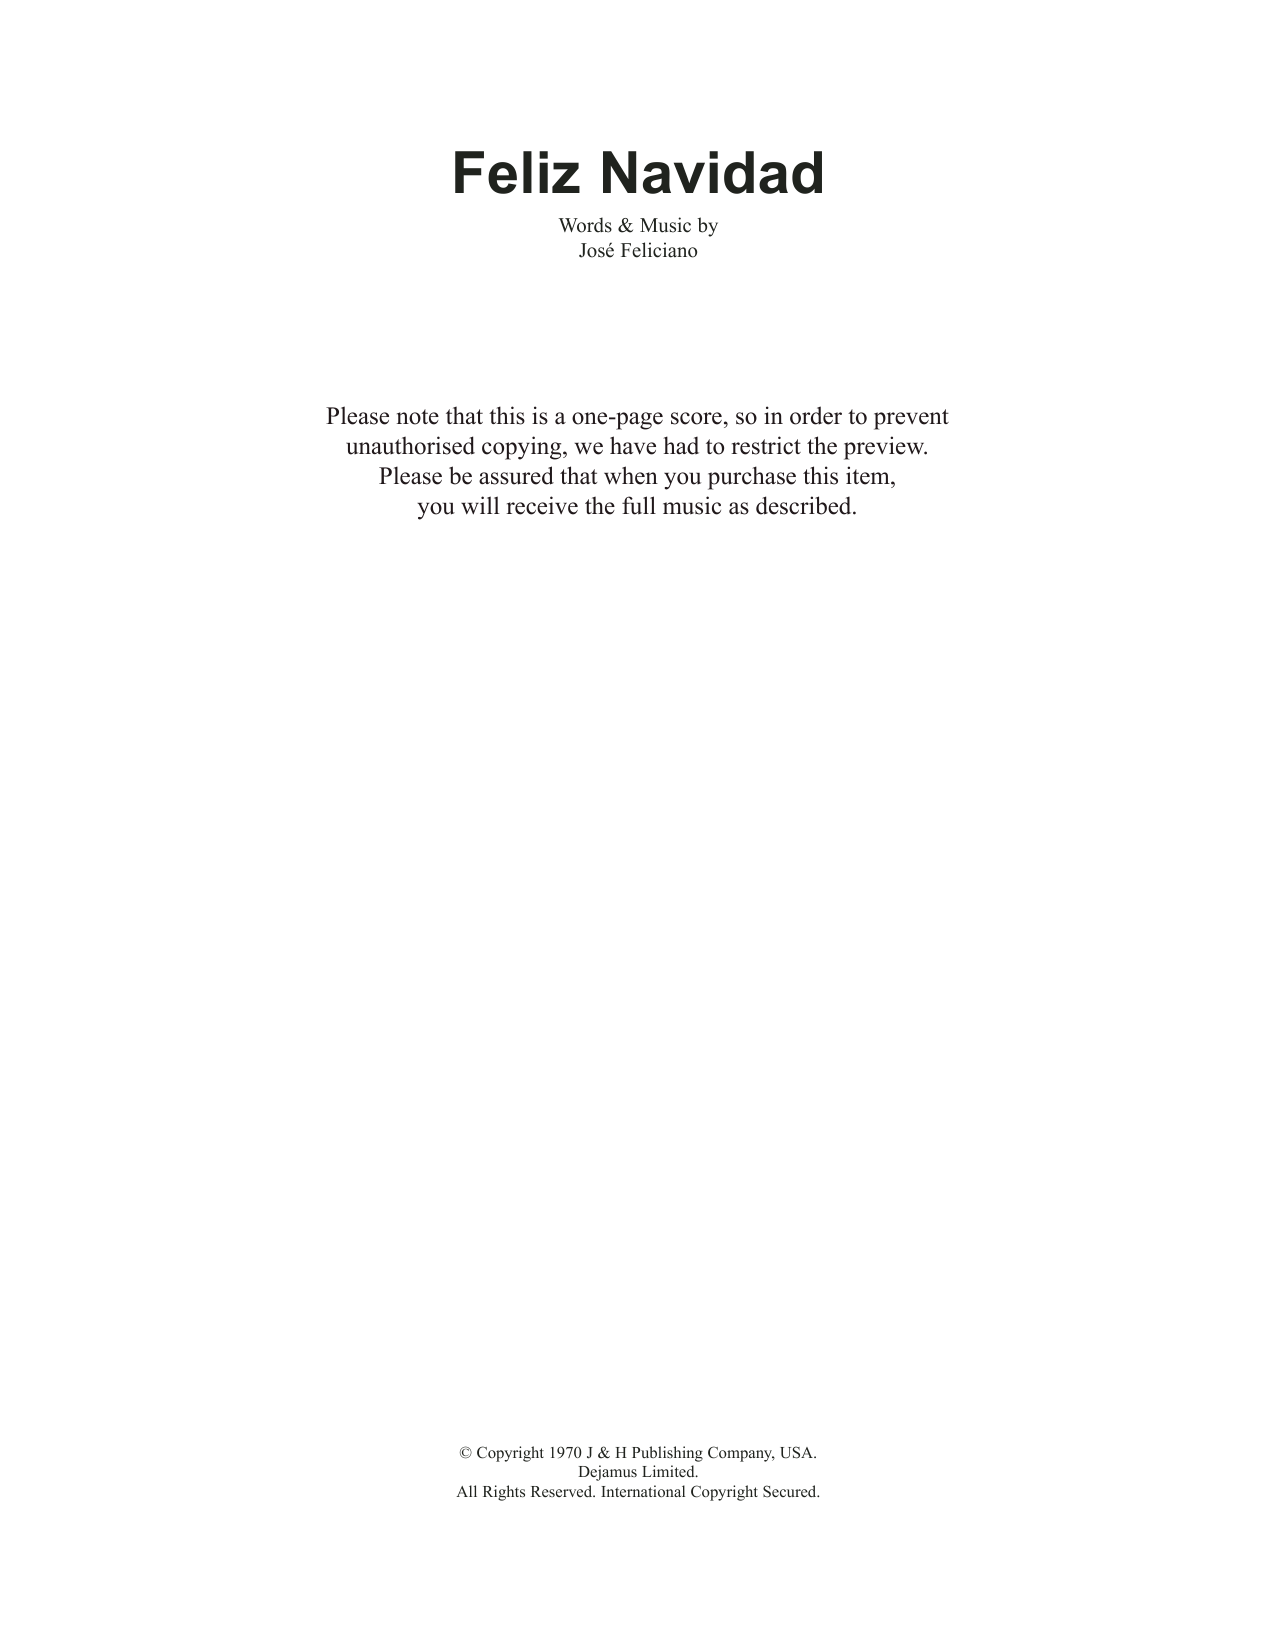 Jose Feliciano Feliz Navidad Sheet Music Notes & Chords for Piano - Download or Print PDF